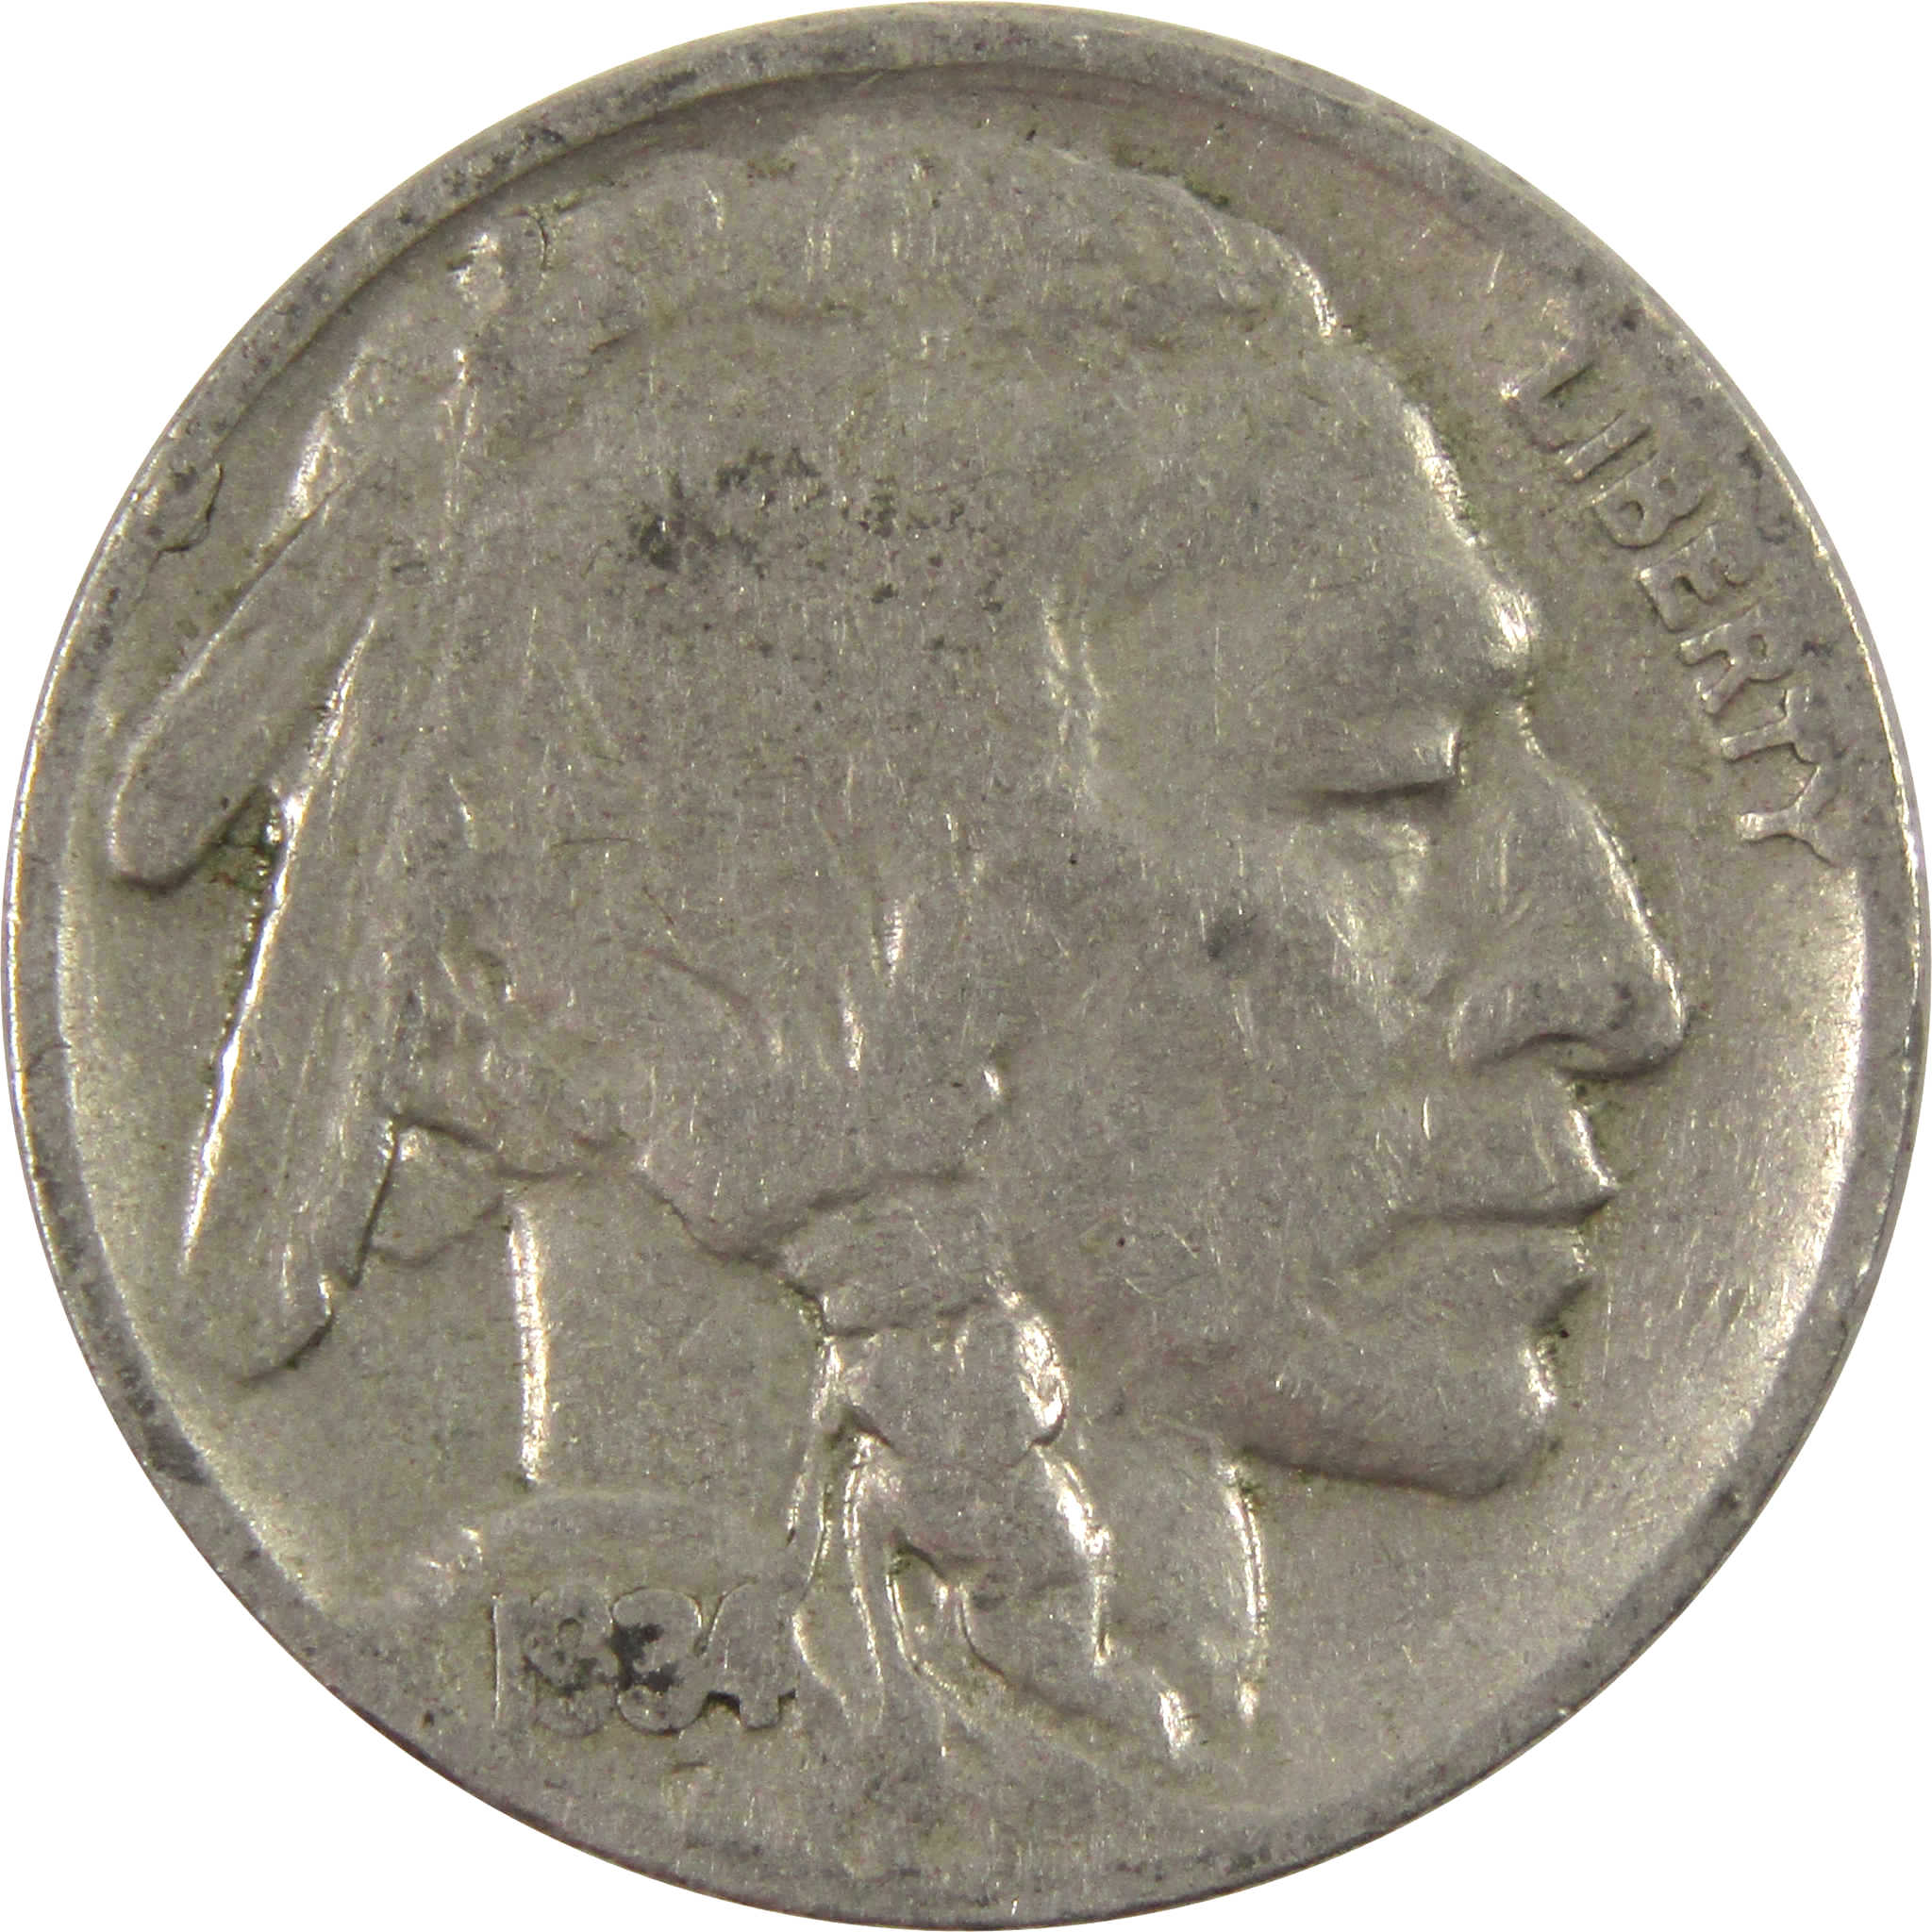 1934 Indian Head Buffalo Nickel AG About Good 5c Coin